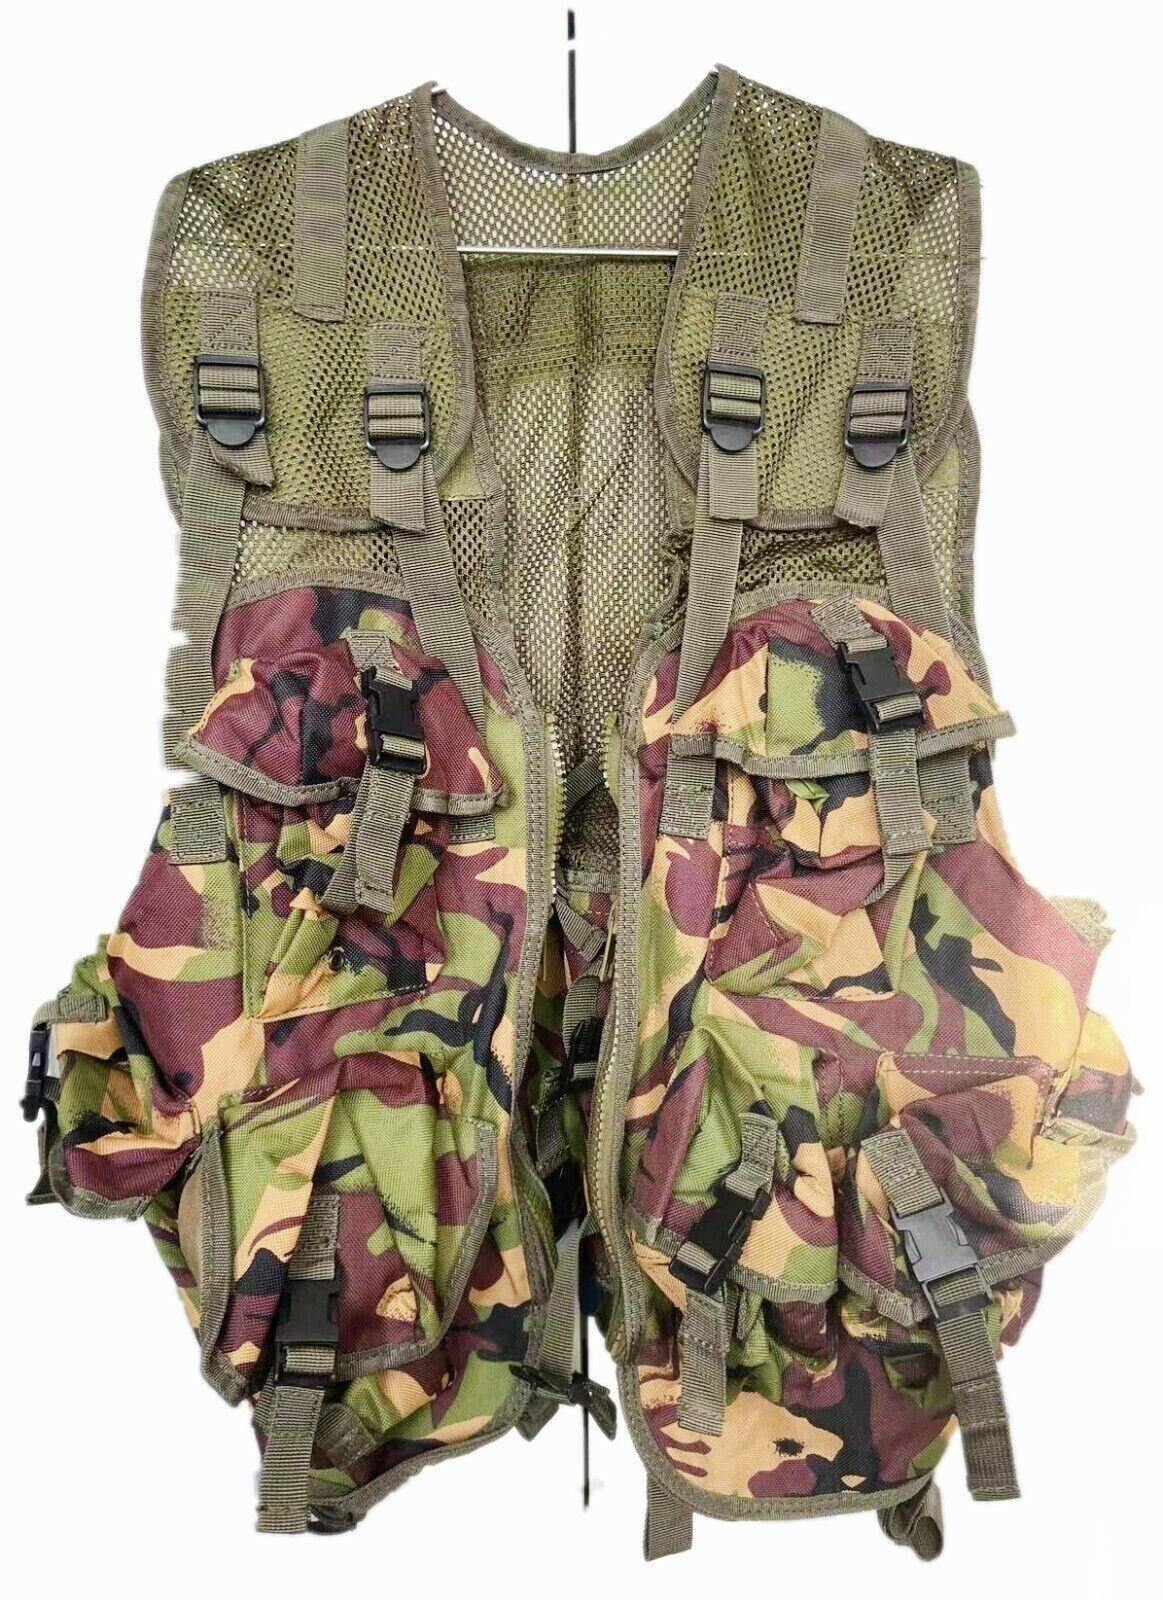 Kenya Army Tactical DPM Camouflage Military Uniform Load Bearing Vest Mesh